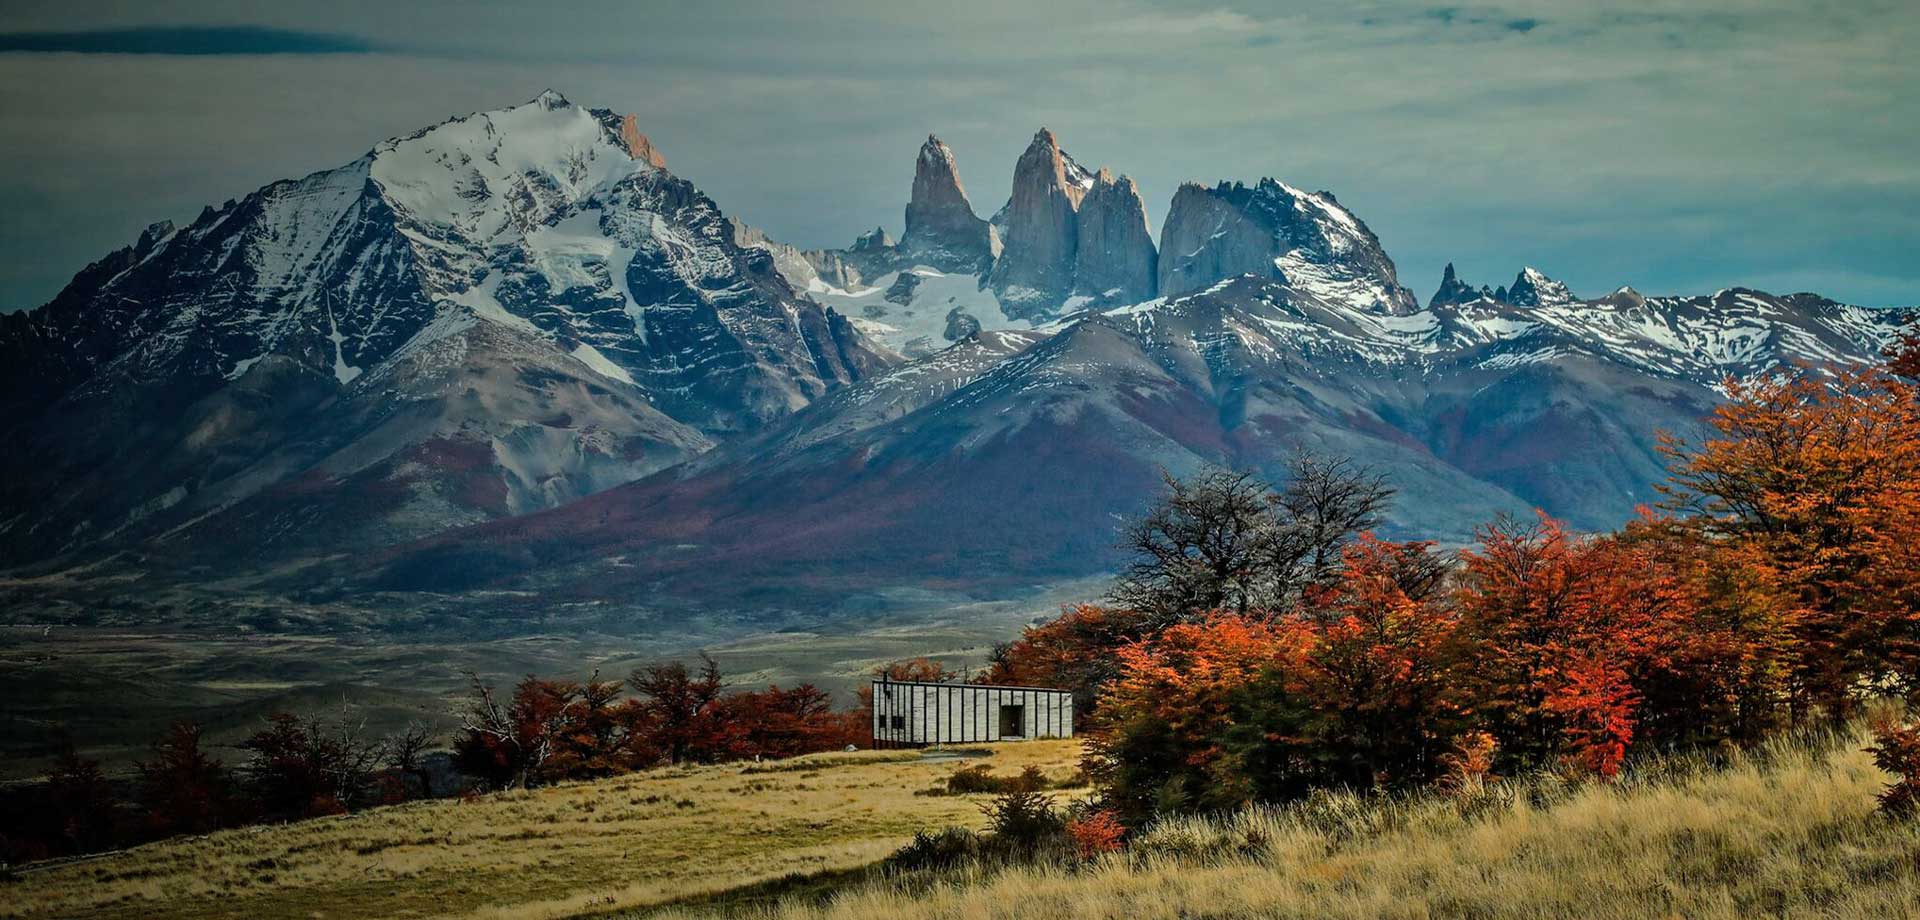 awasi patagonia luxury eco lodge chile